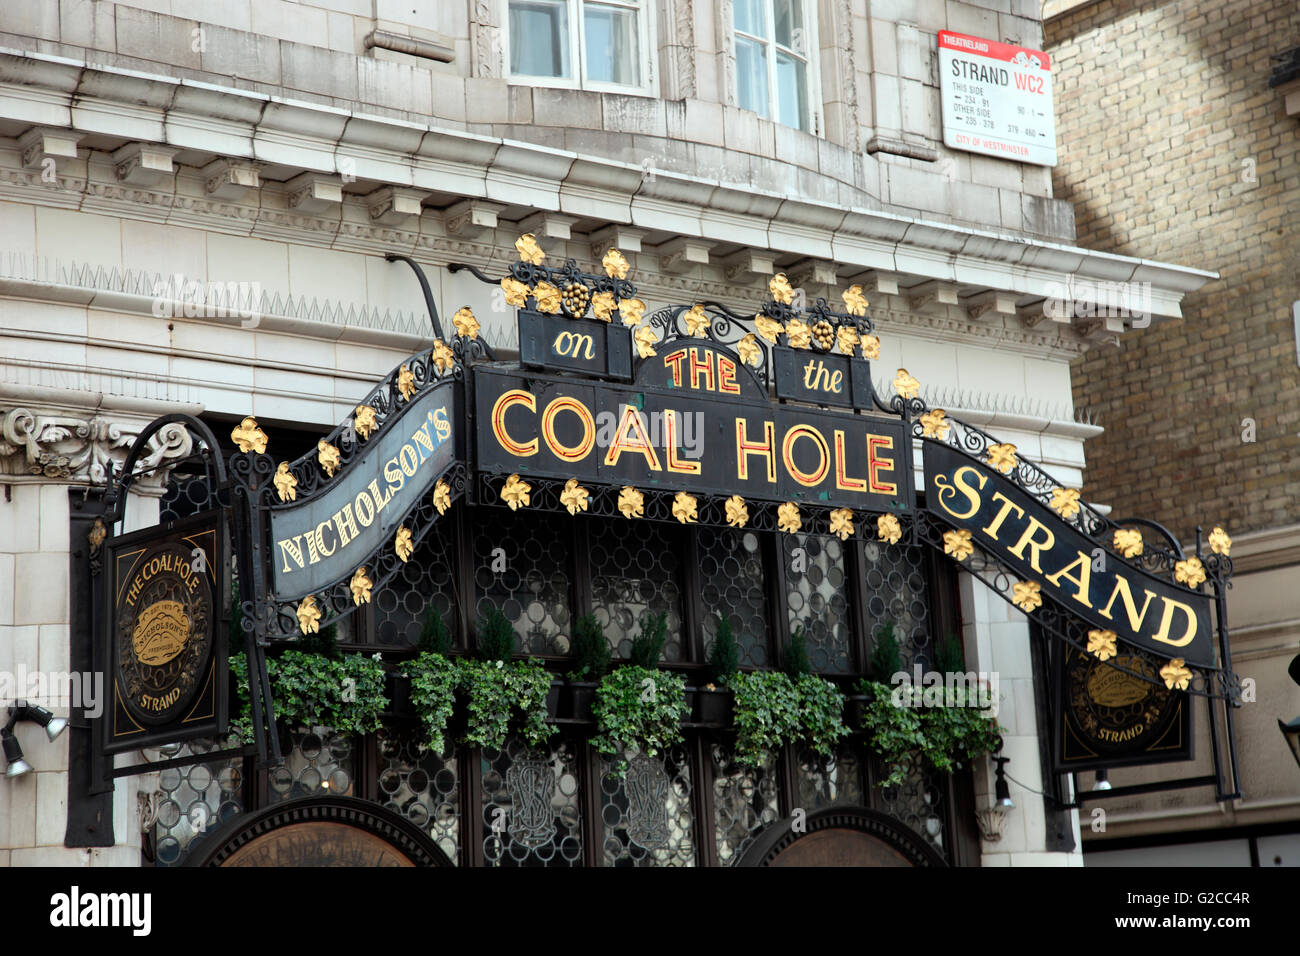 Nicholsons Kohle Loch auf dem Strang, Londoner Wahrzeichen pub Stockfoto